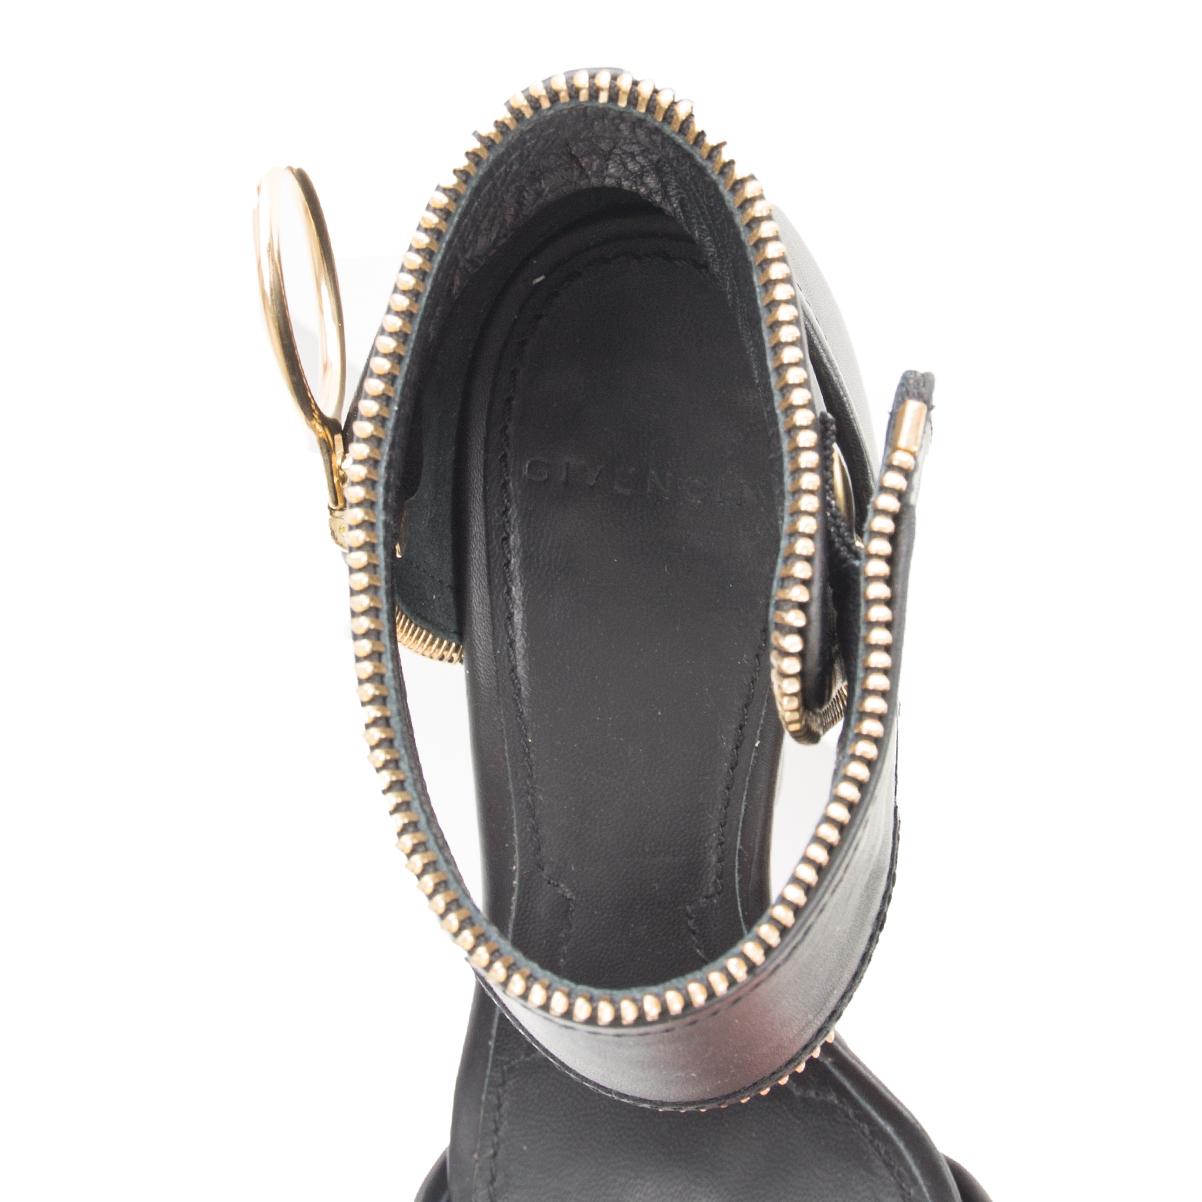 Black GIVENCHY black leather ZIPPER PLATFORM Sandals Shoes 37 For Sale